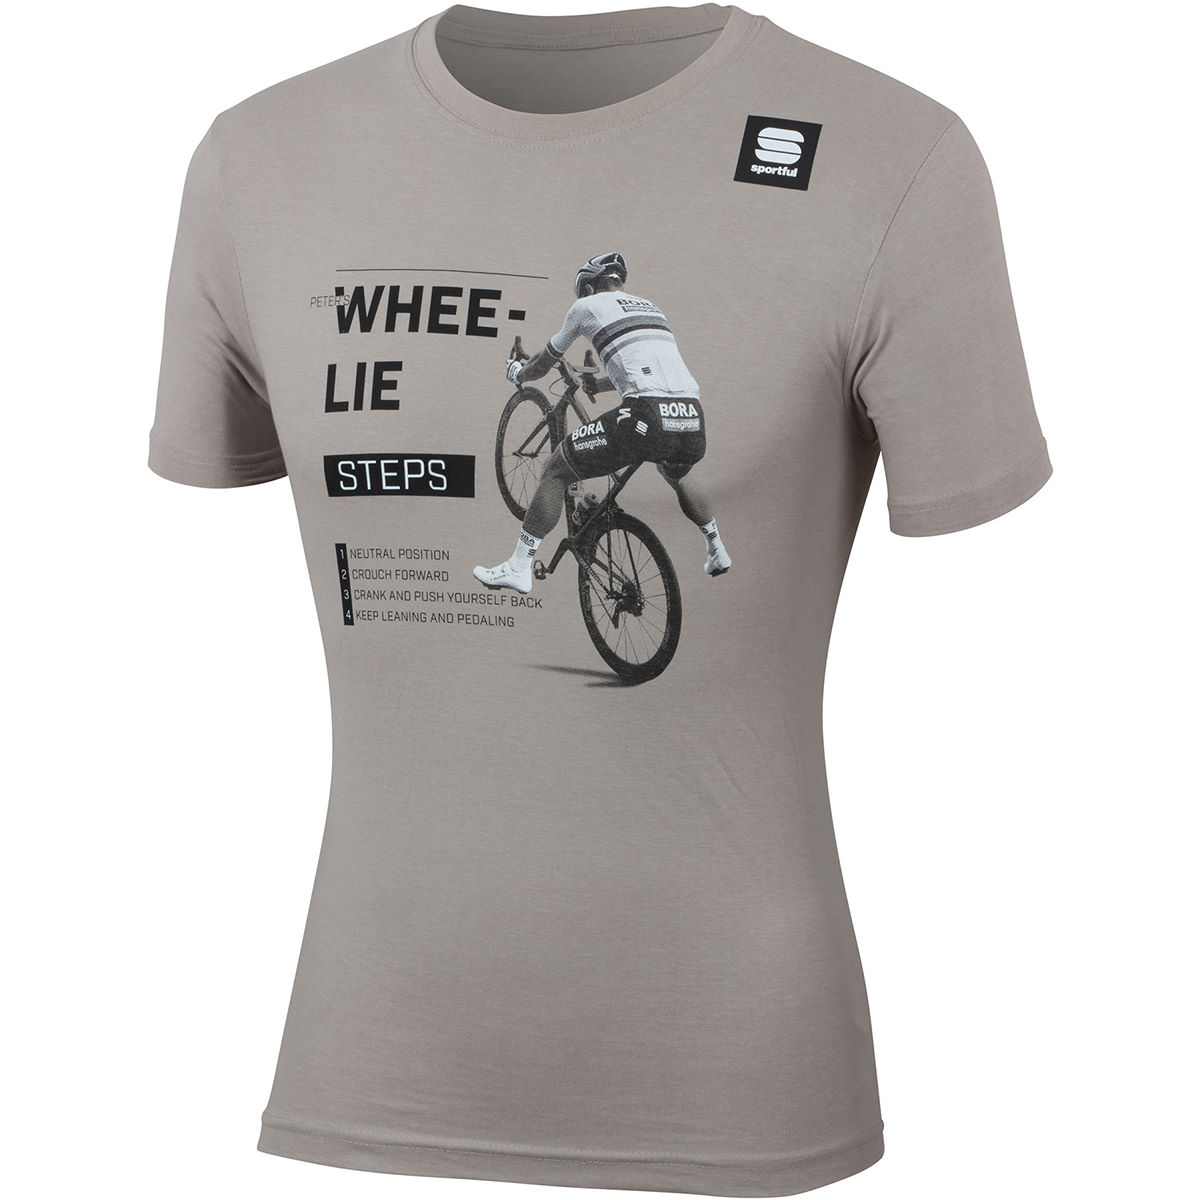 Sportful Sagan Whee-Lie Tee - Camisetas